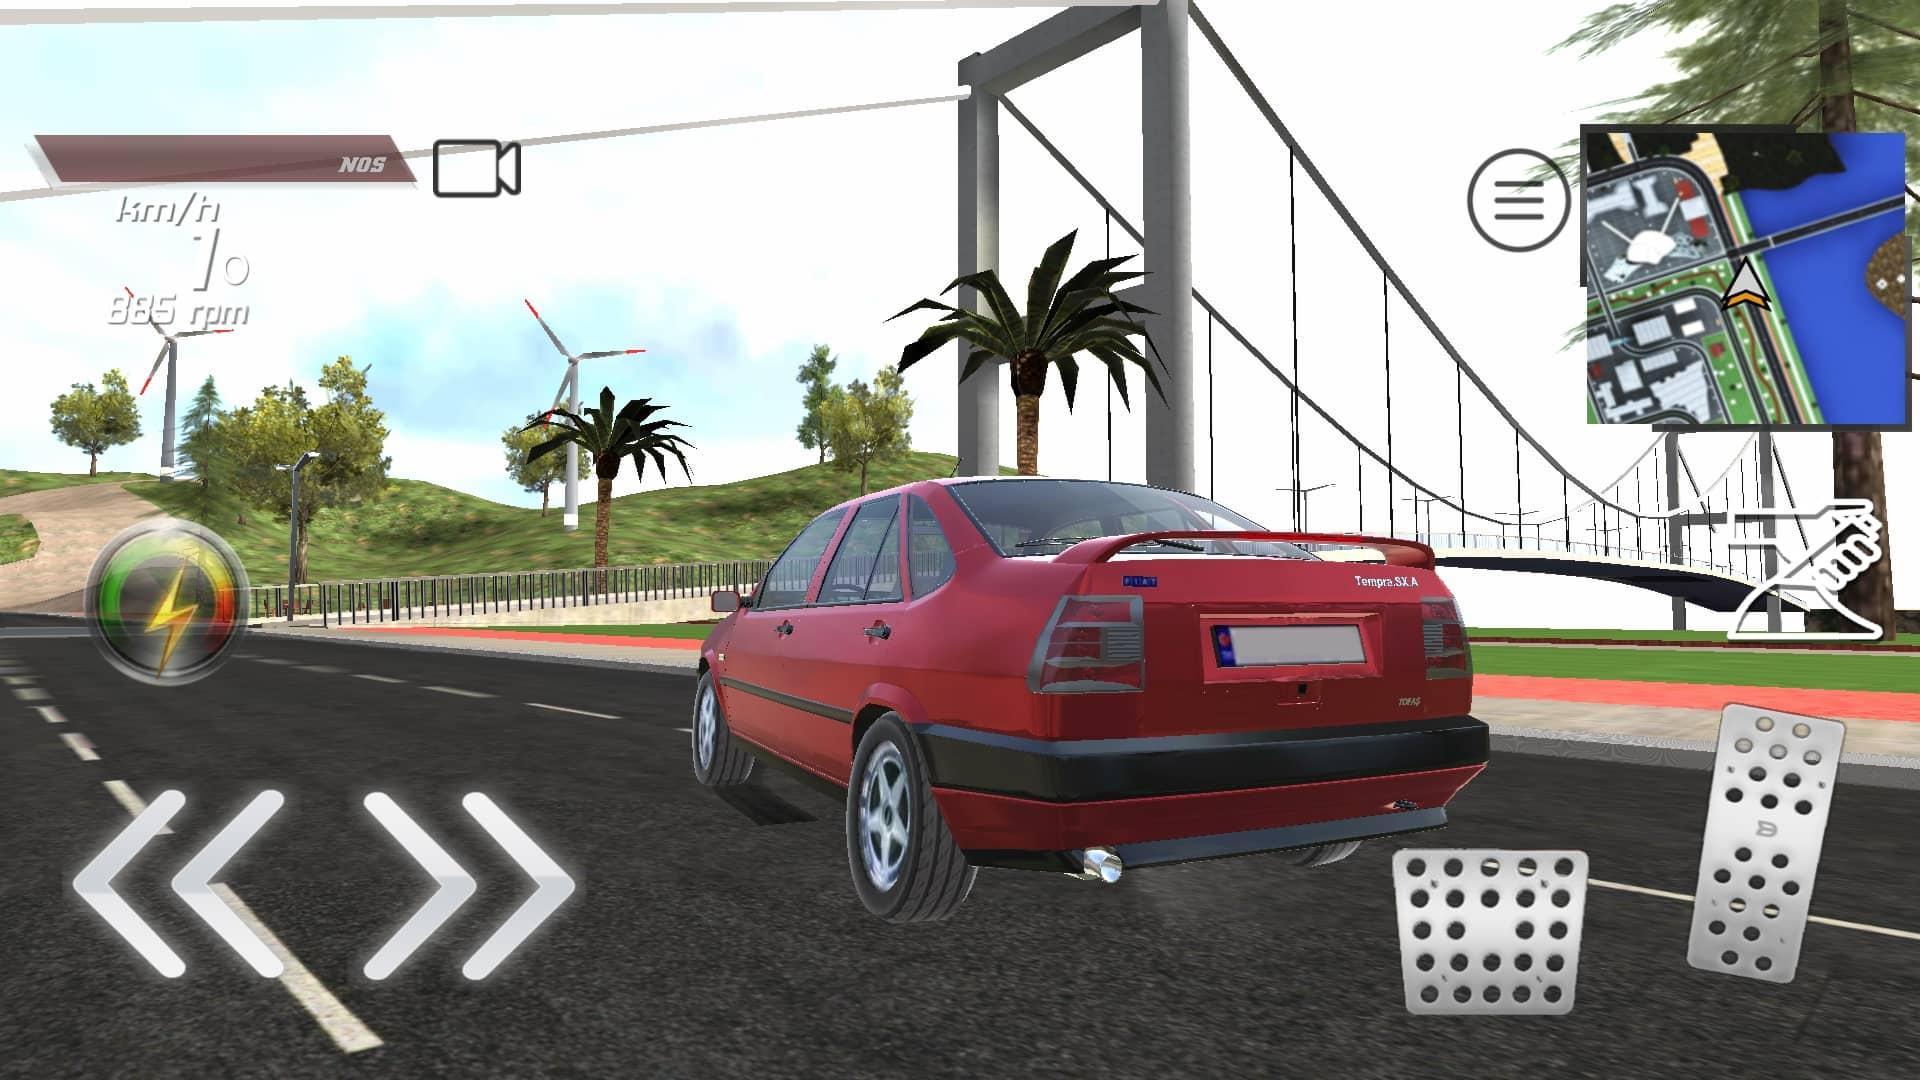 Tempra - City Simulation, Quests and Parking 1.7 Screenshot 20